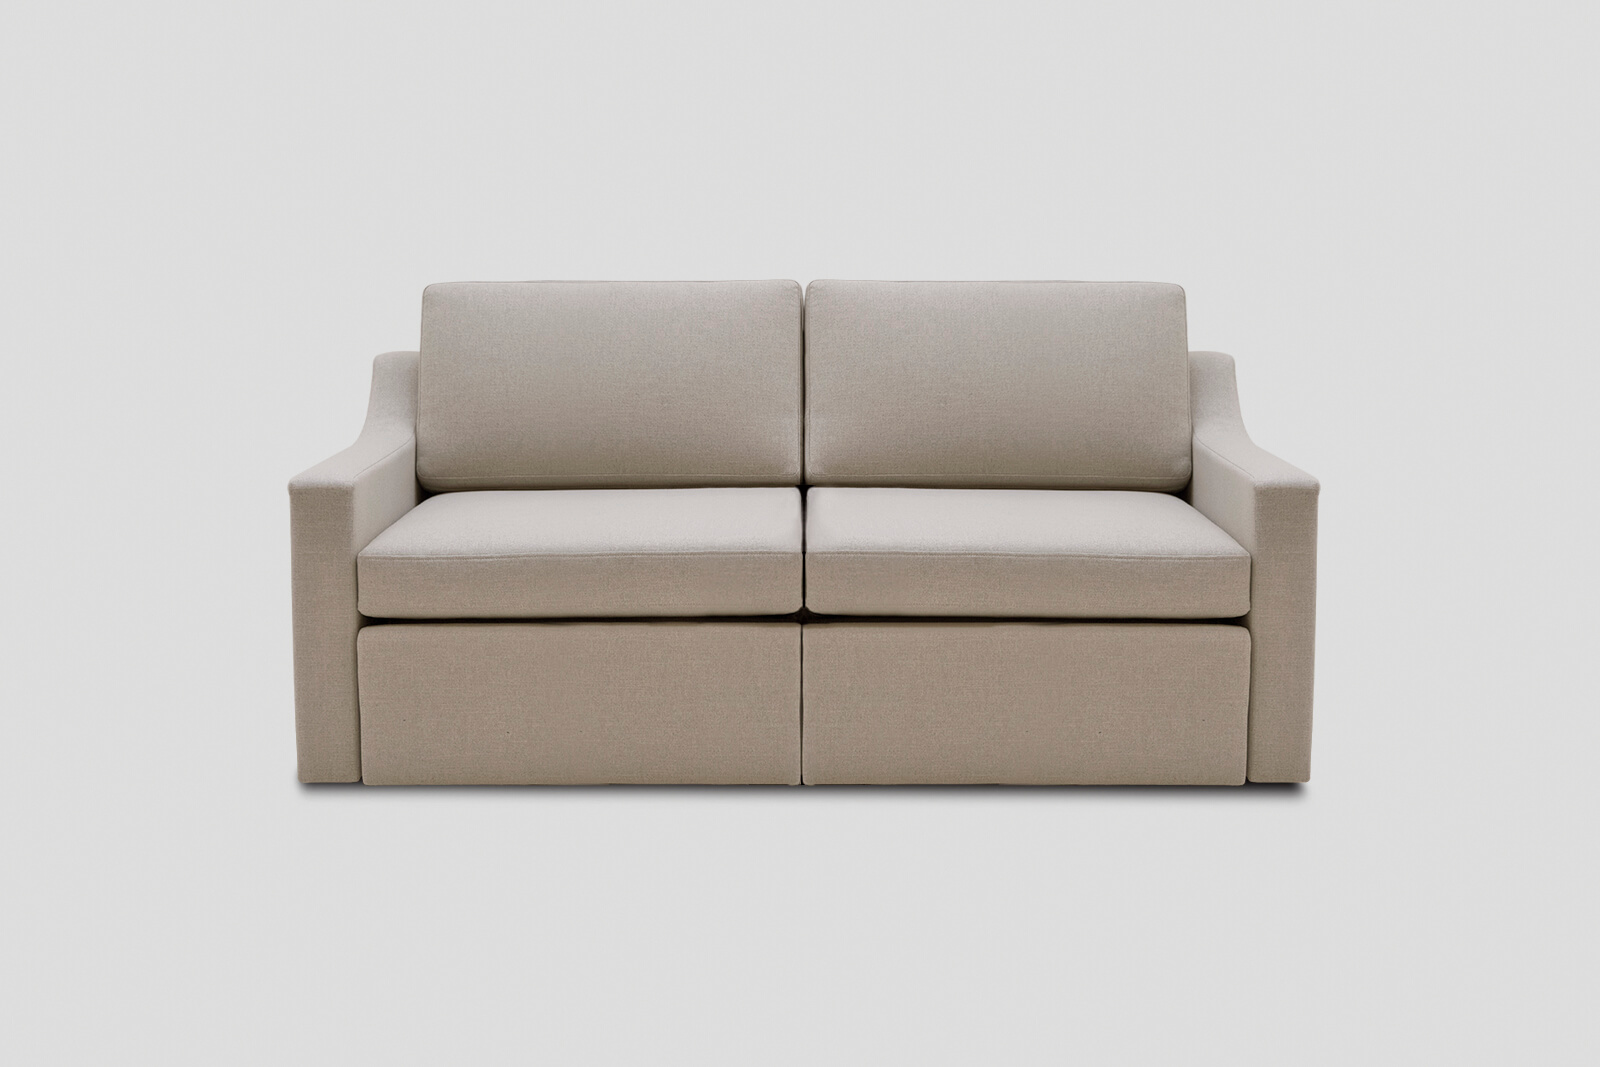 HBSB02-kingsize-sofa-bed-coconut-front